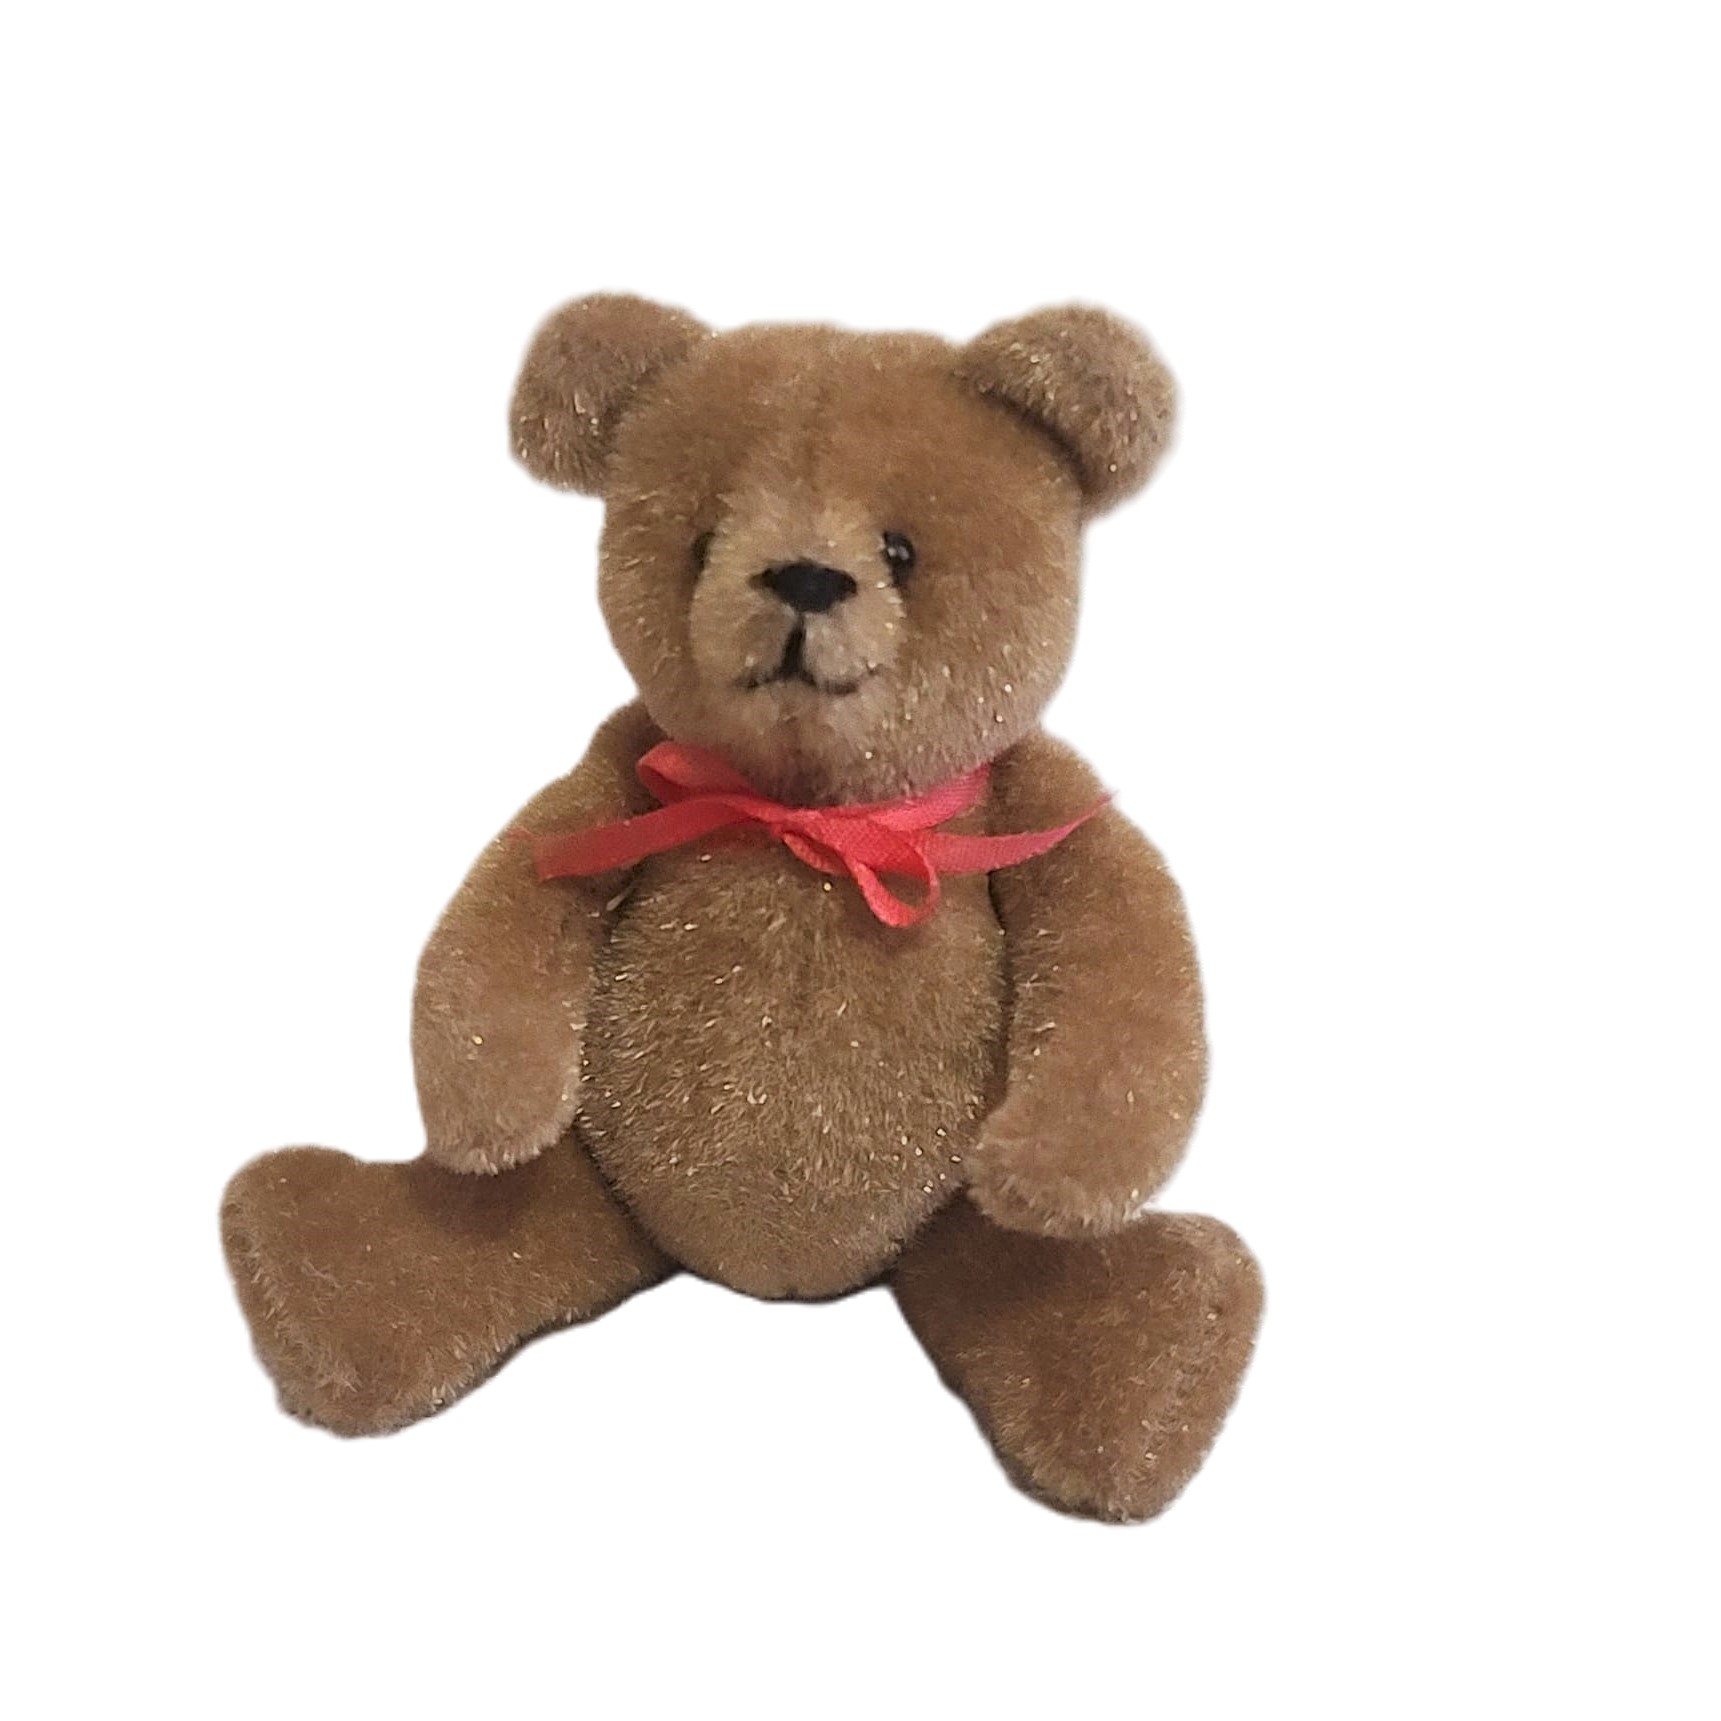 Vintage mini bear jointed bear 4" tall